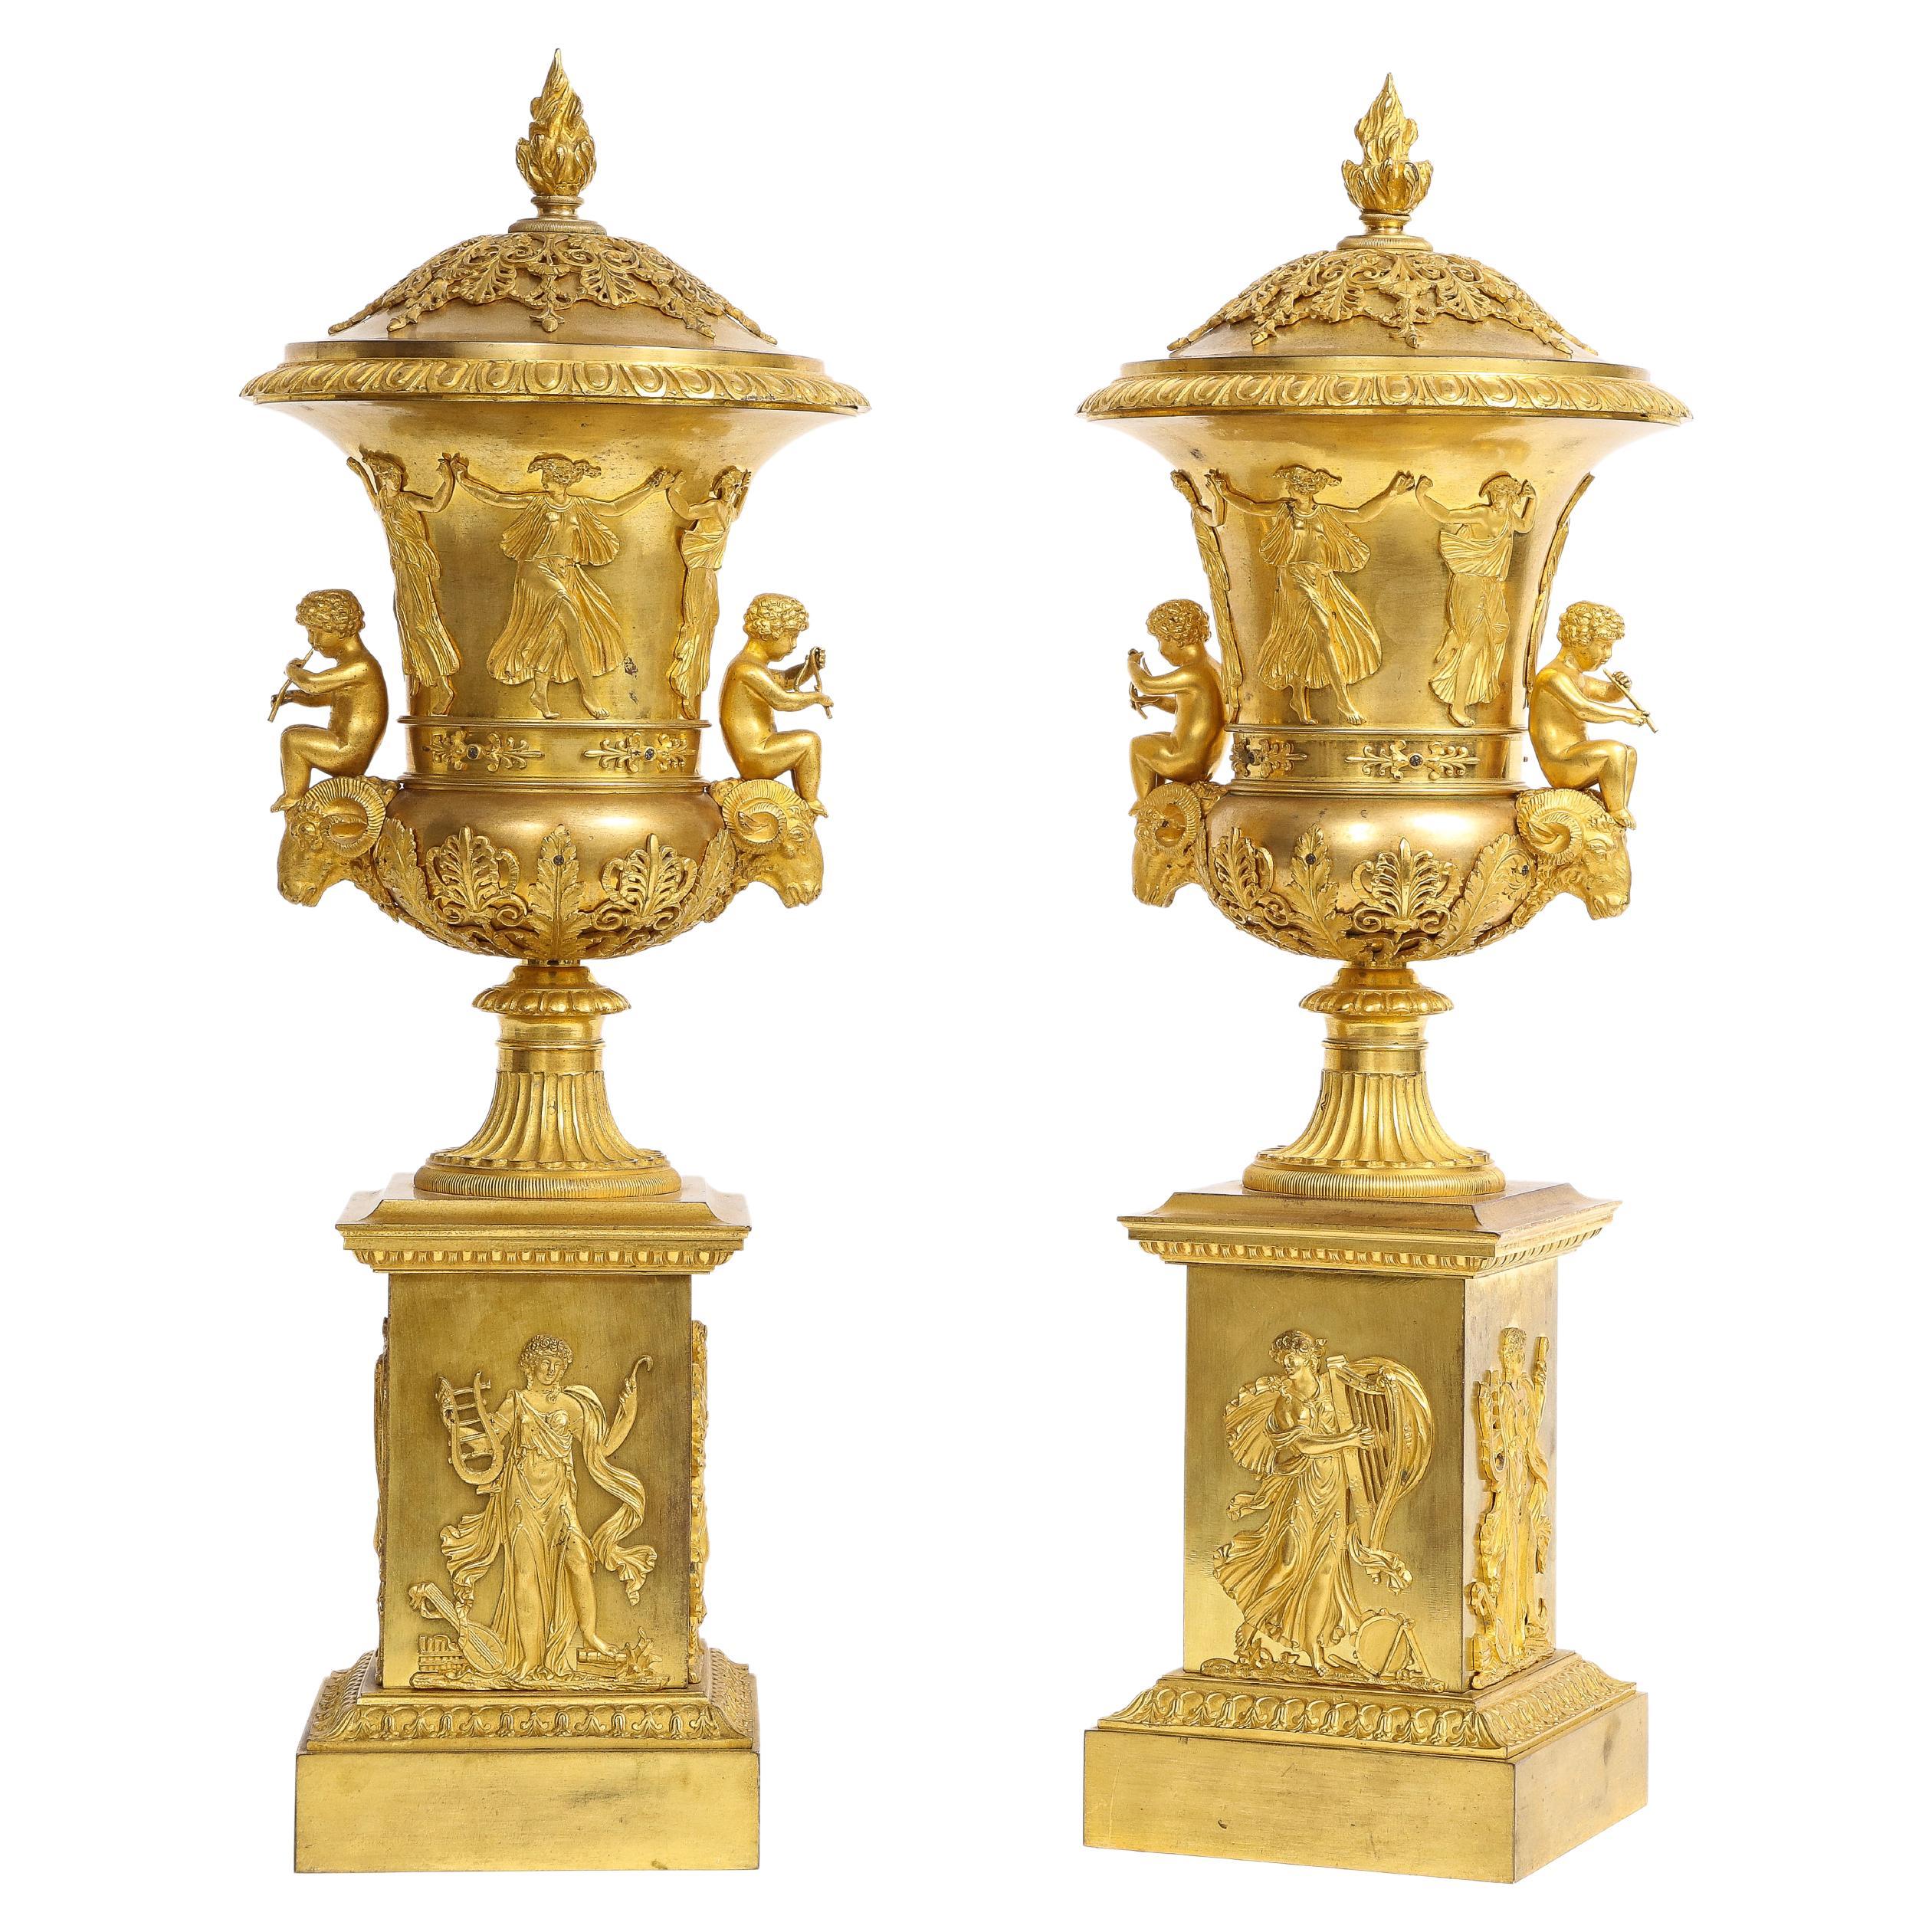 Impt Pair of French Empire Ormolu Covered vases/Potpourris, Att. Thomier A Paris For Sale